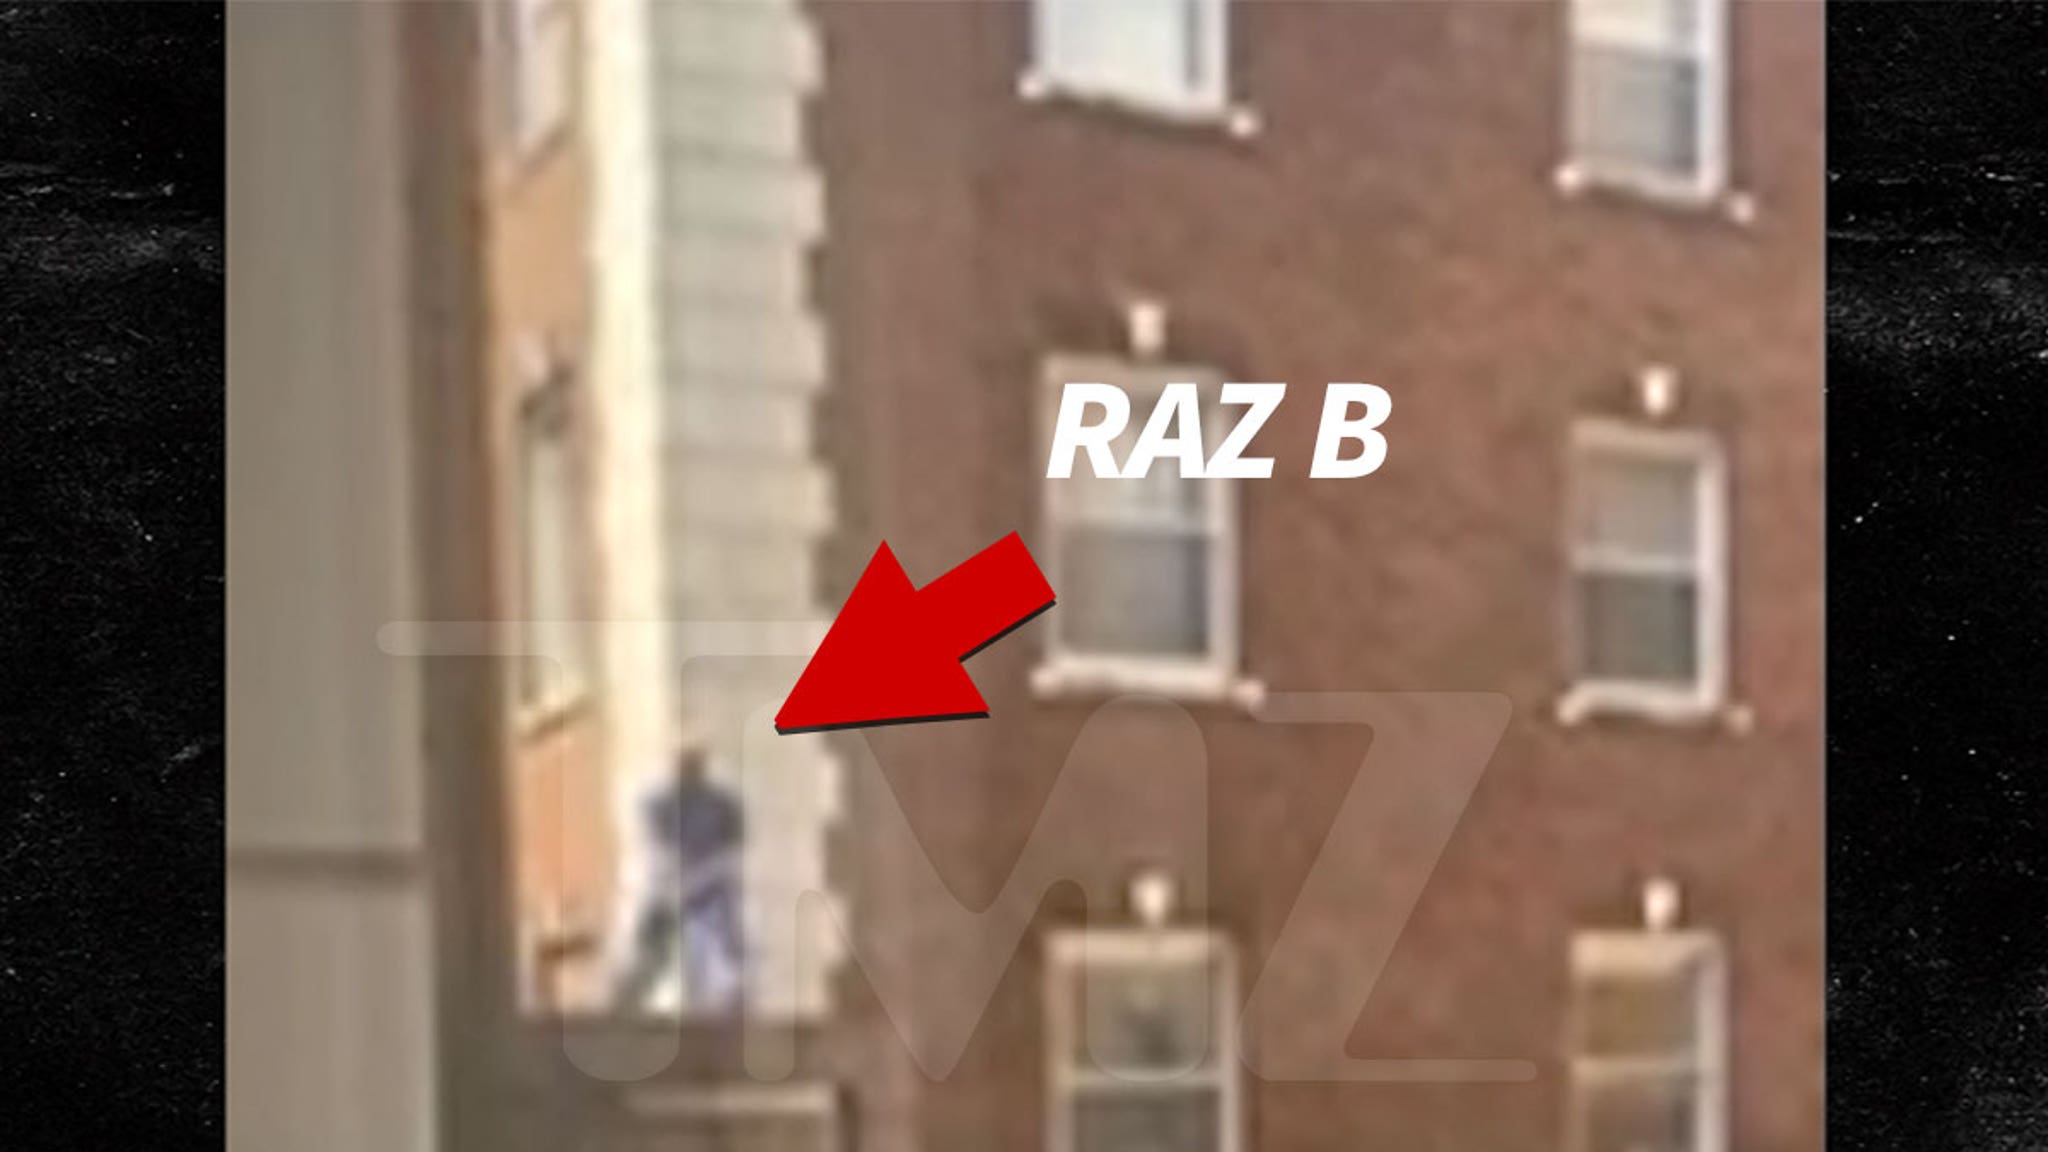 B2K’s Raz B Breaks Window and Climbs Onto Hospital Roof, Cops Called